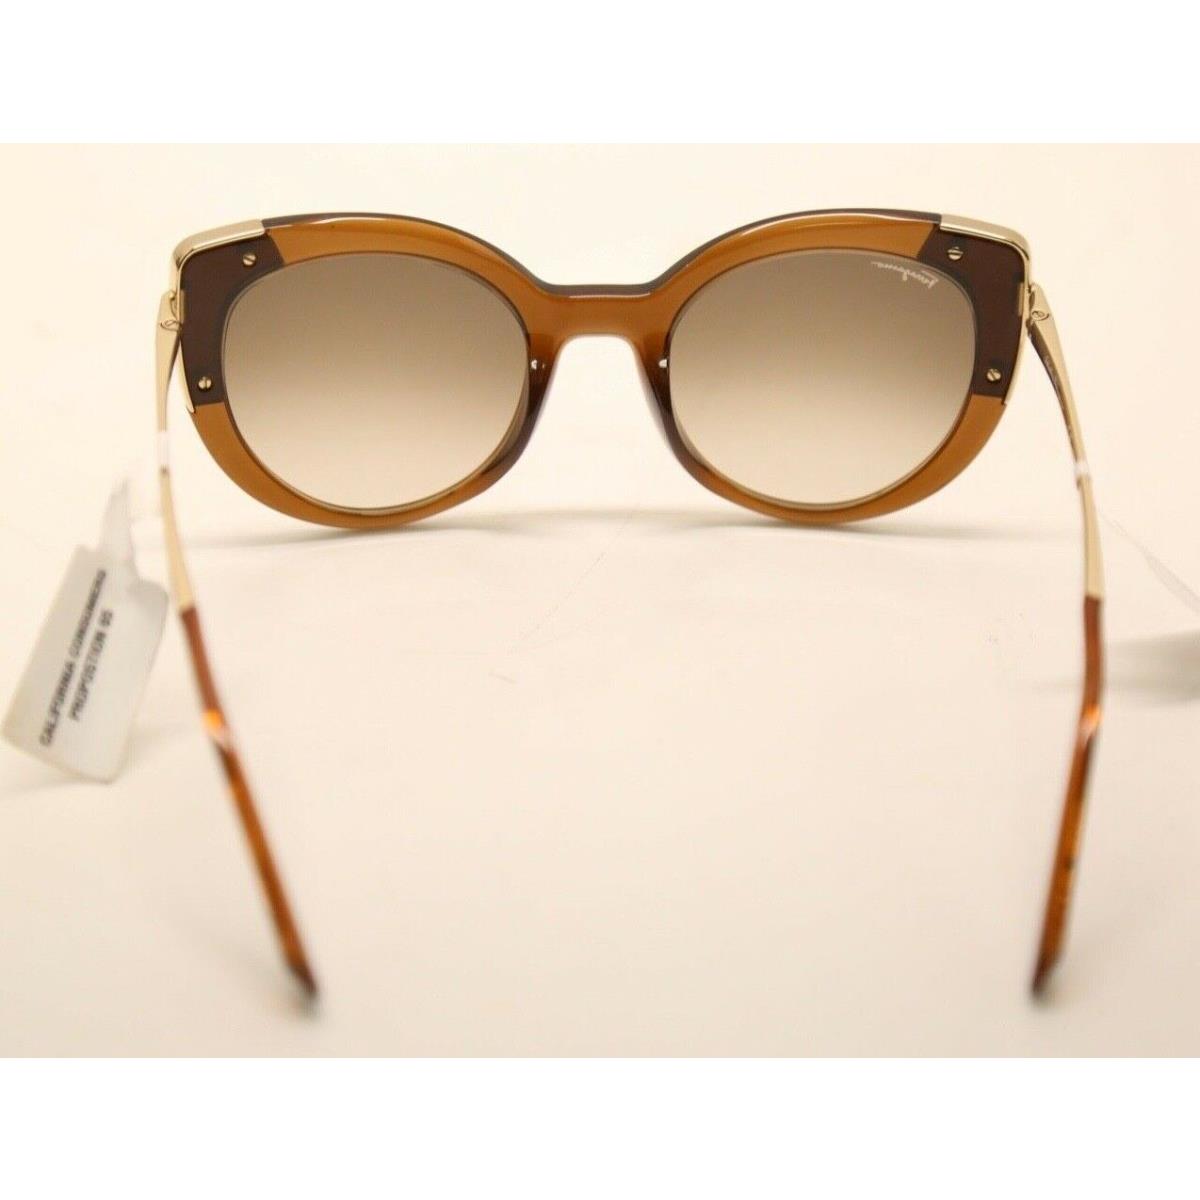 Salvatore Ferragamo sunglasses  - Crystal Brown Frame, Brown Lens 2